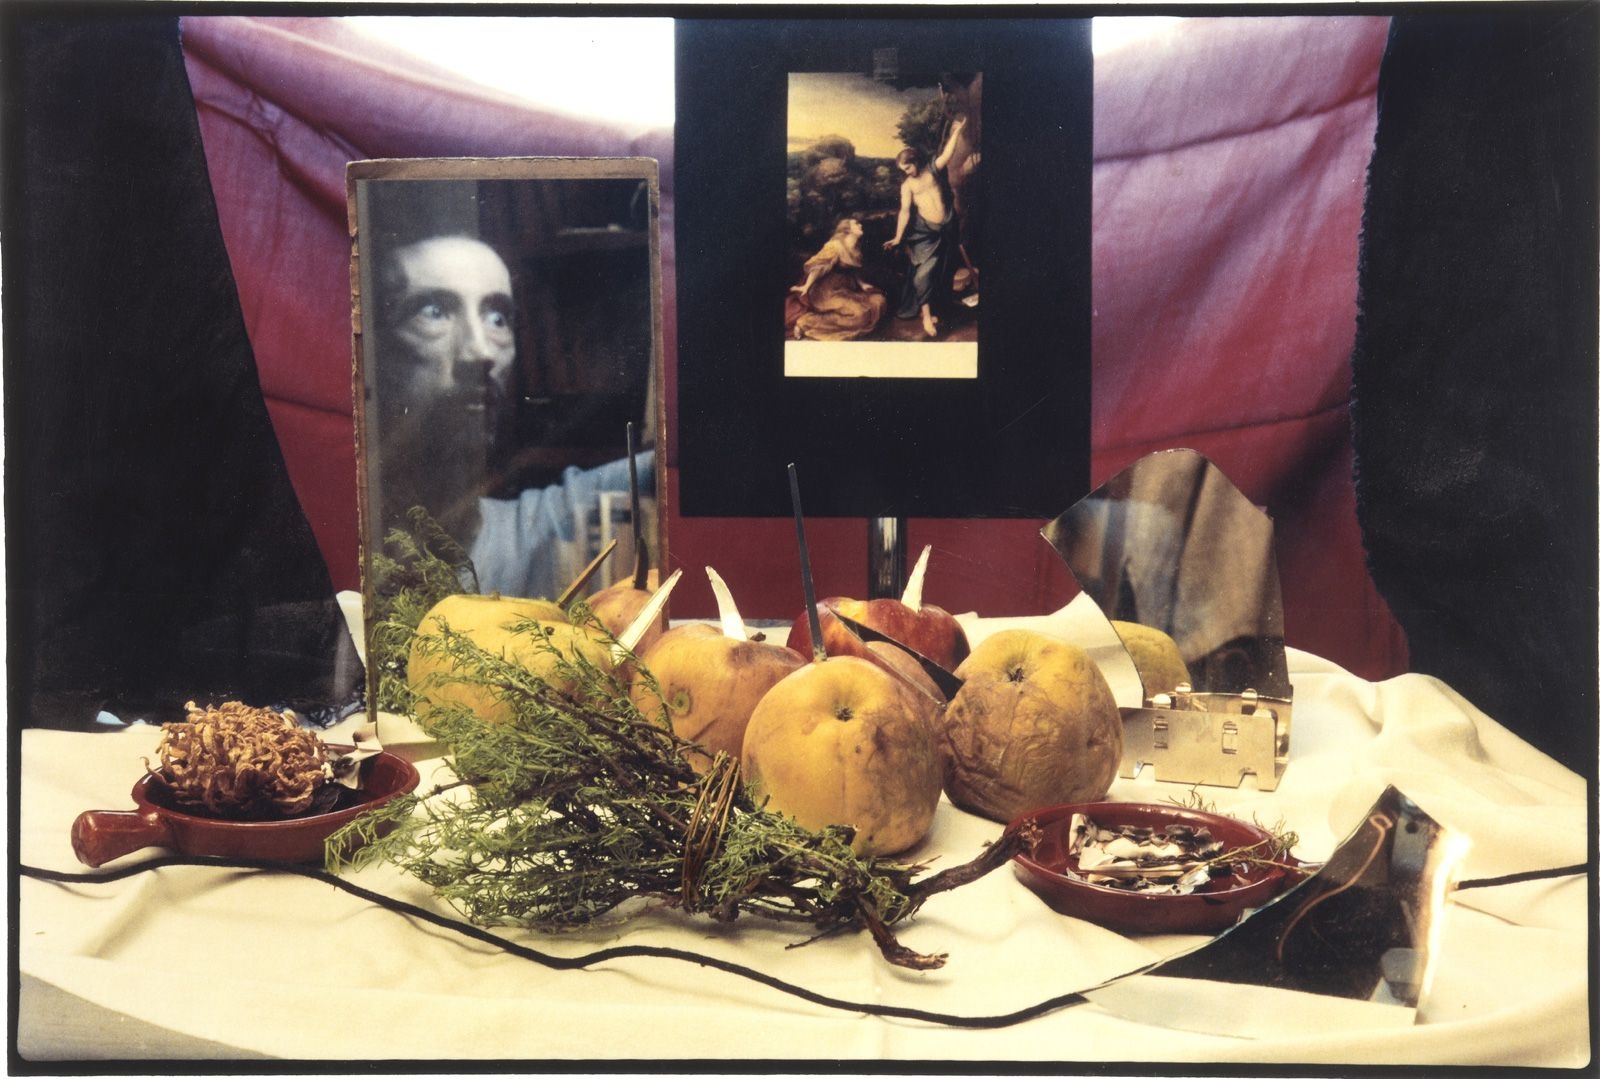 Correggio's apples by David Nebreda, 1989-1990